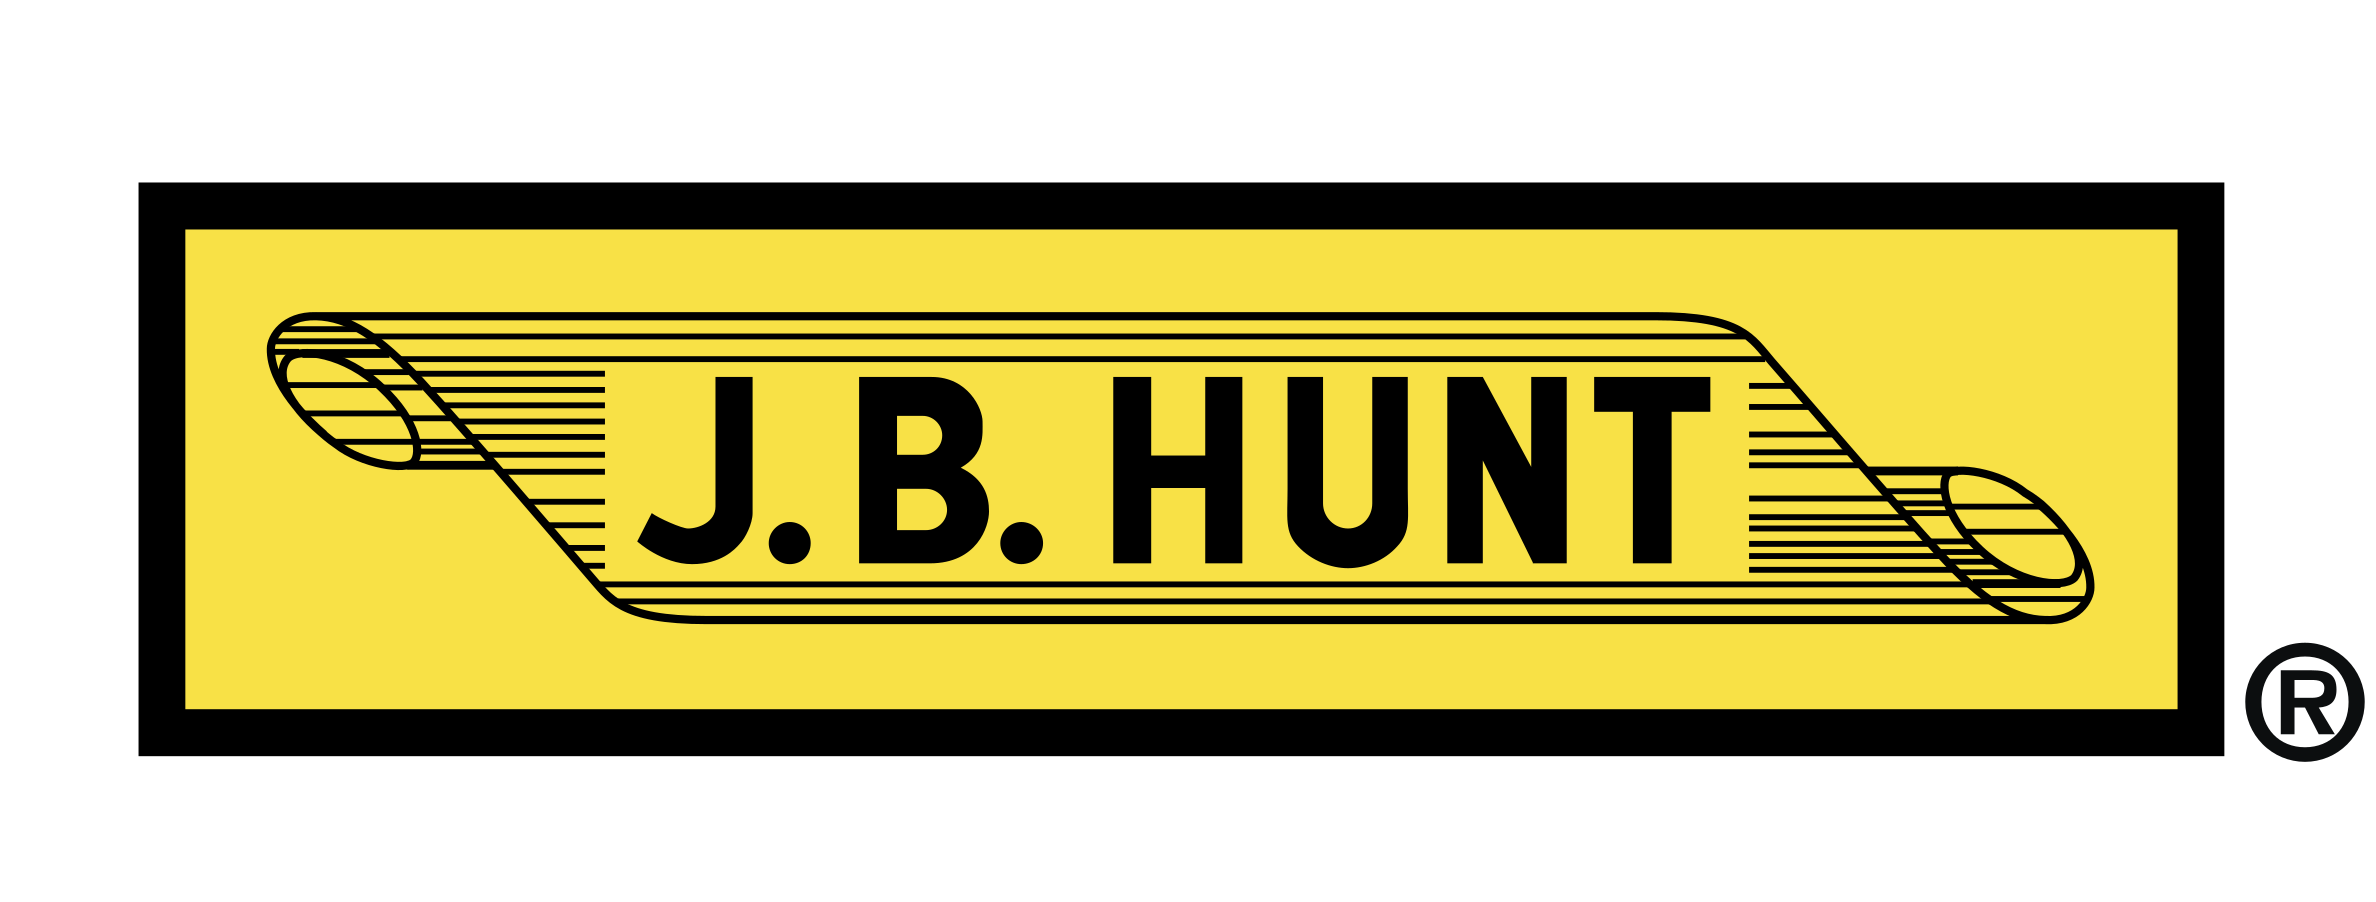 j-b-hunt-logo-png-transparent1